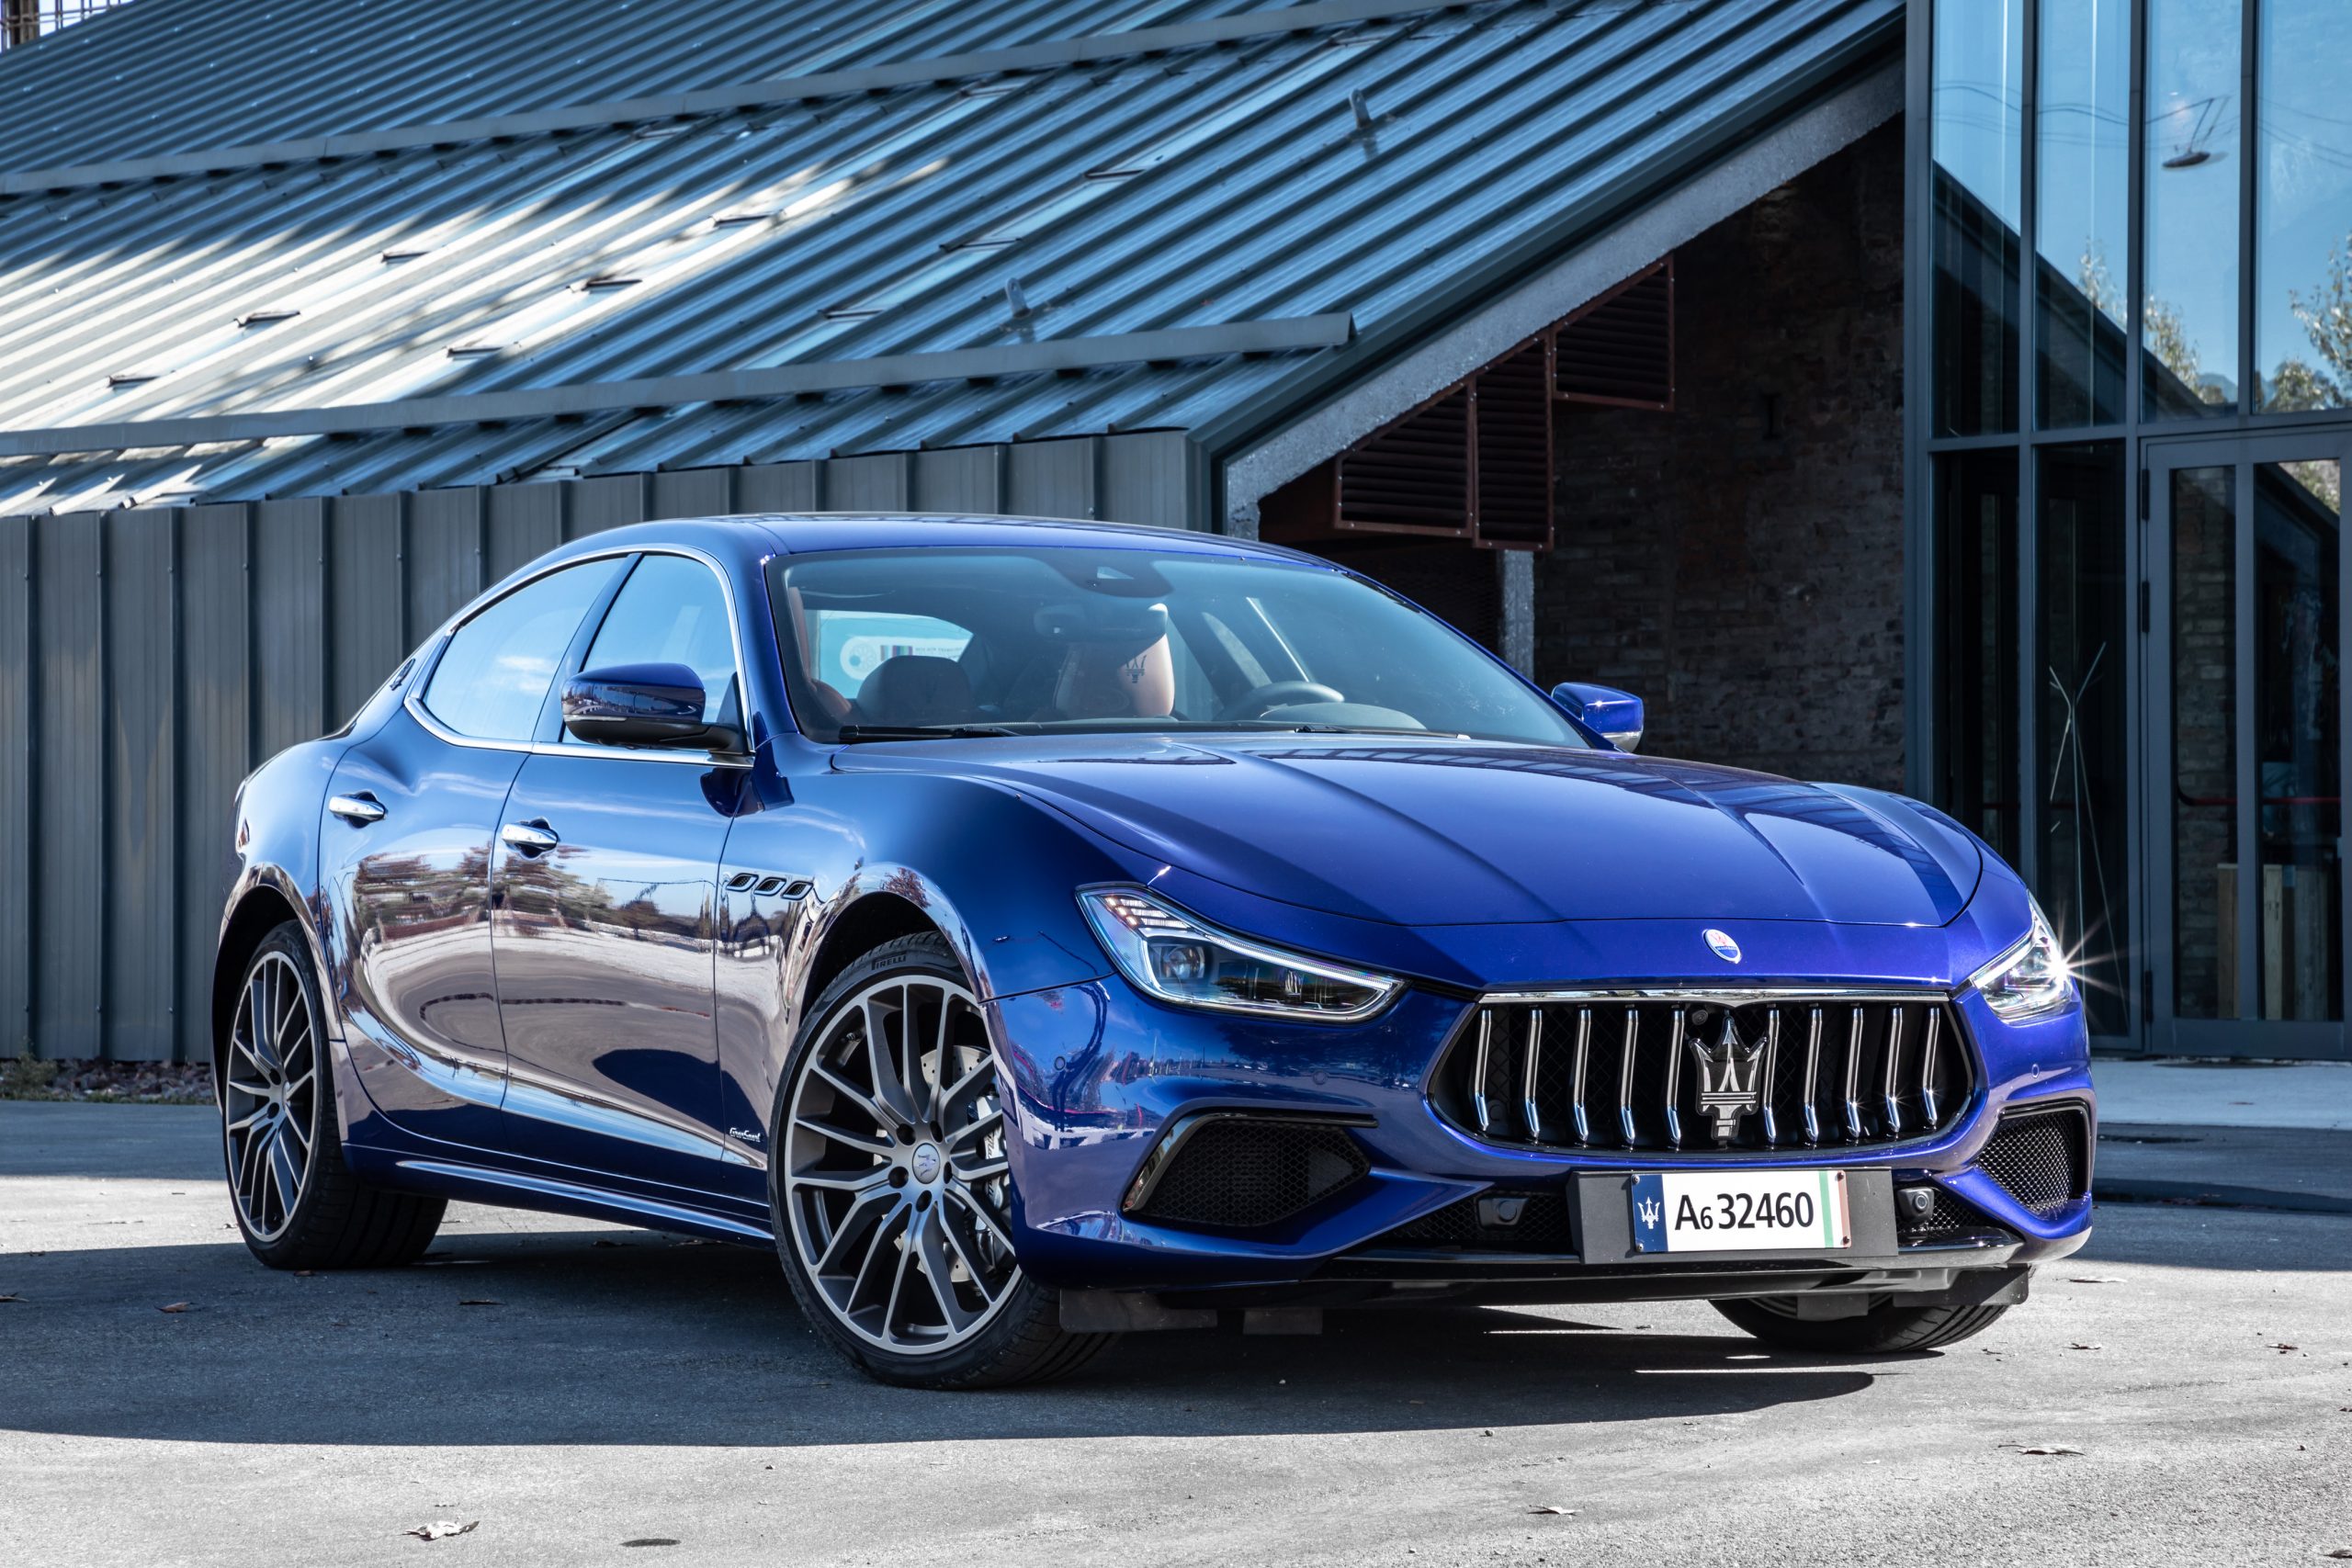 Maserati JHB celebrates start of a new era